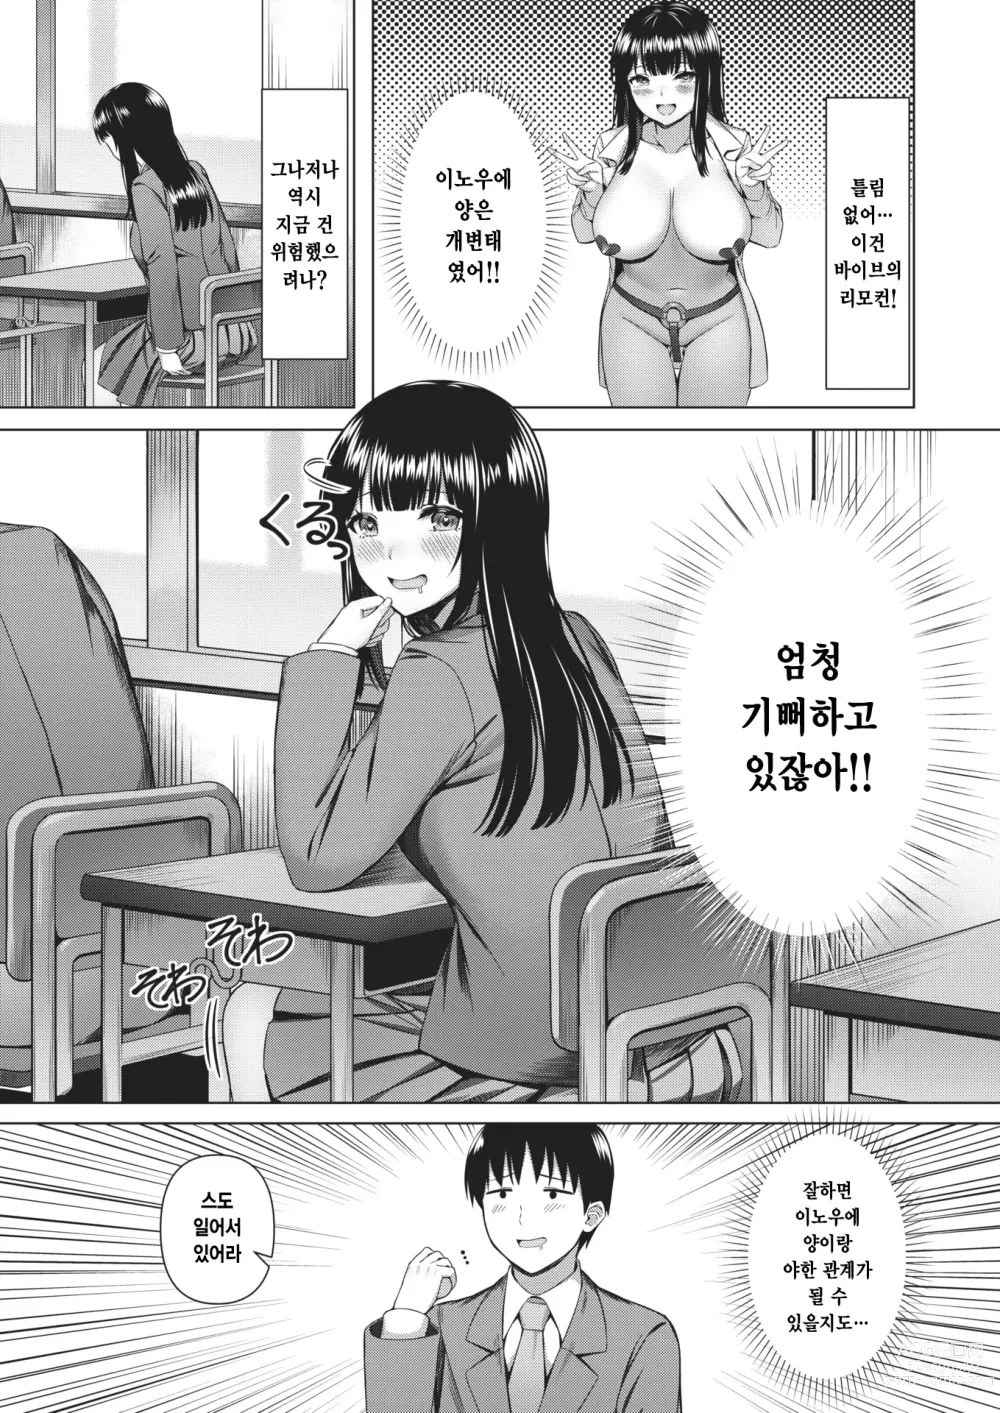 Page 5 of manga 모범생이 떨어트린 것